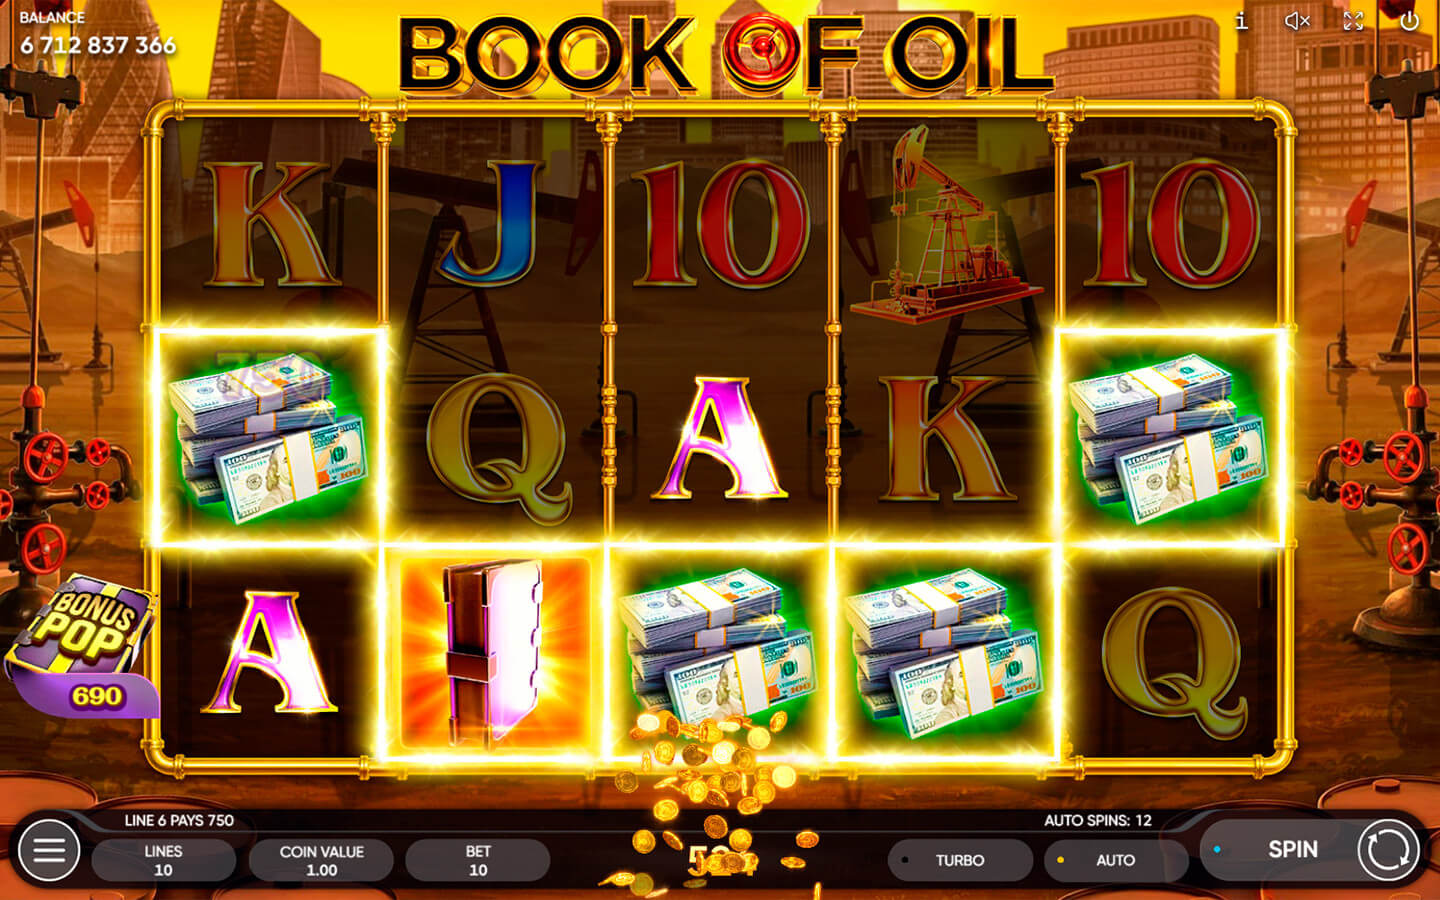 Book of oil